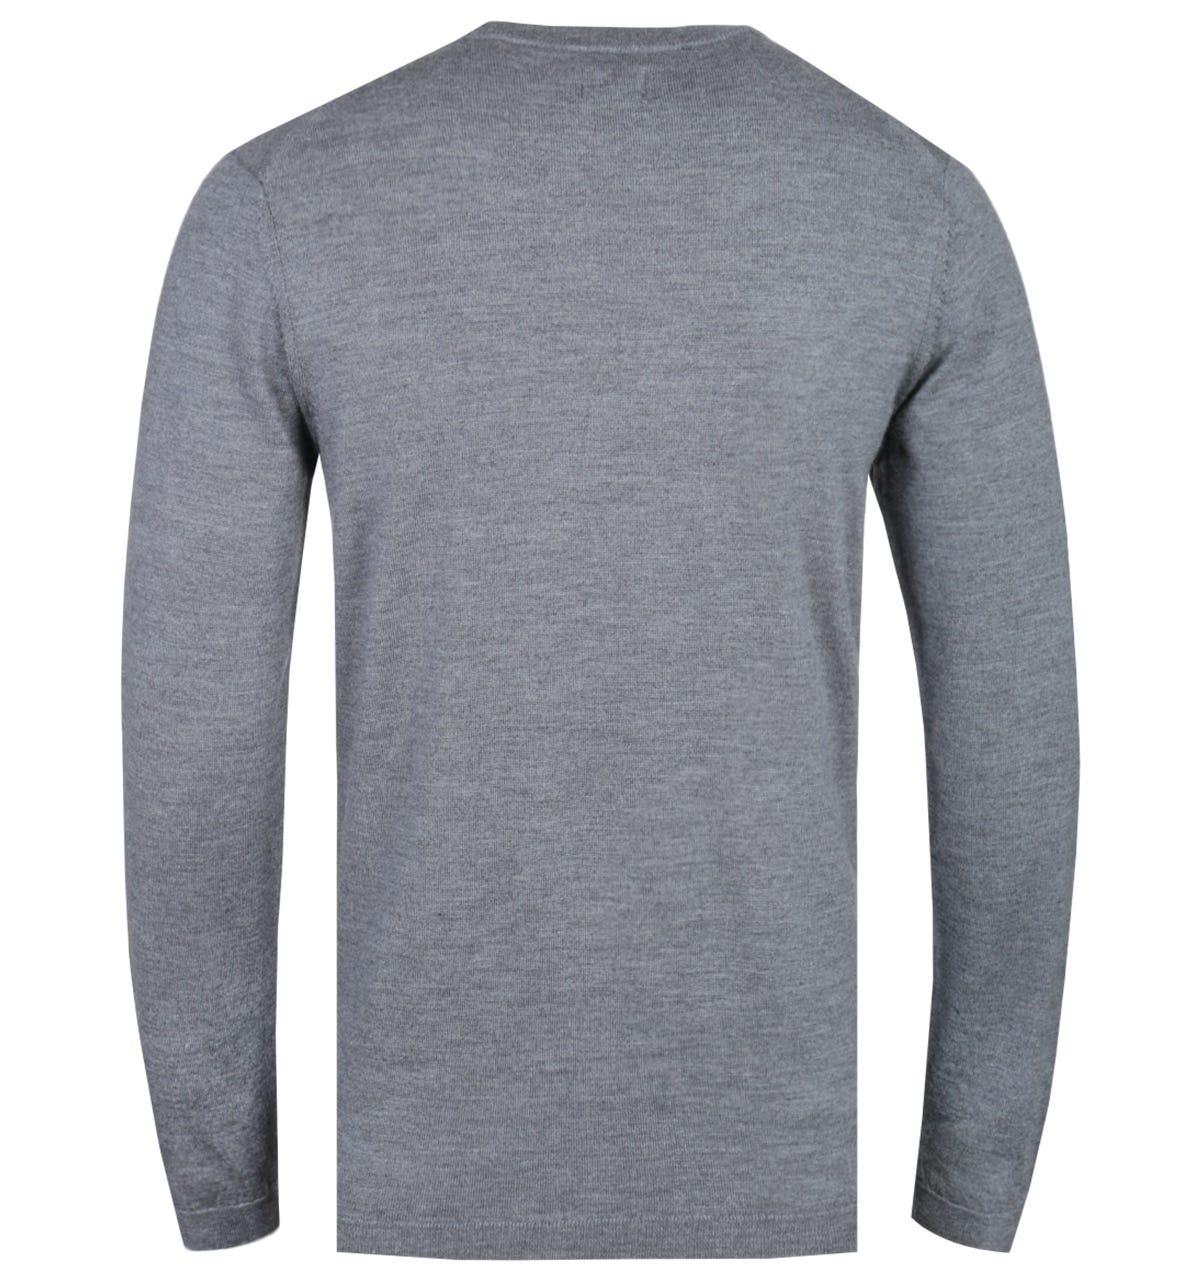 Edwin Merino Wool Grey Heather Crew Neck Sweater in Gray for Men - Lyst